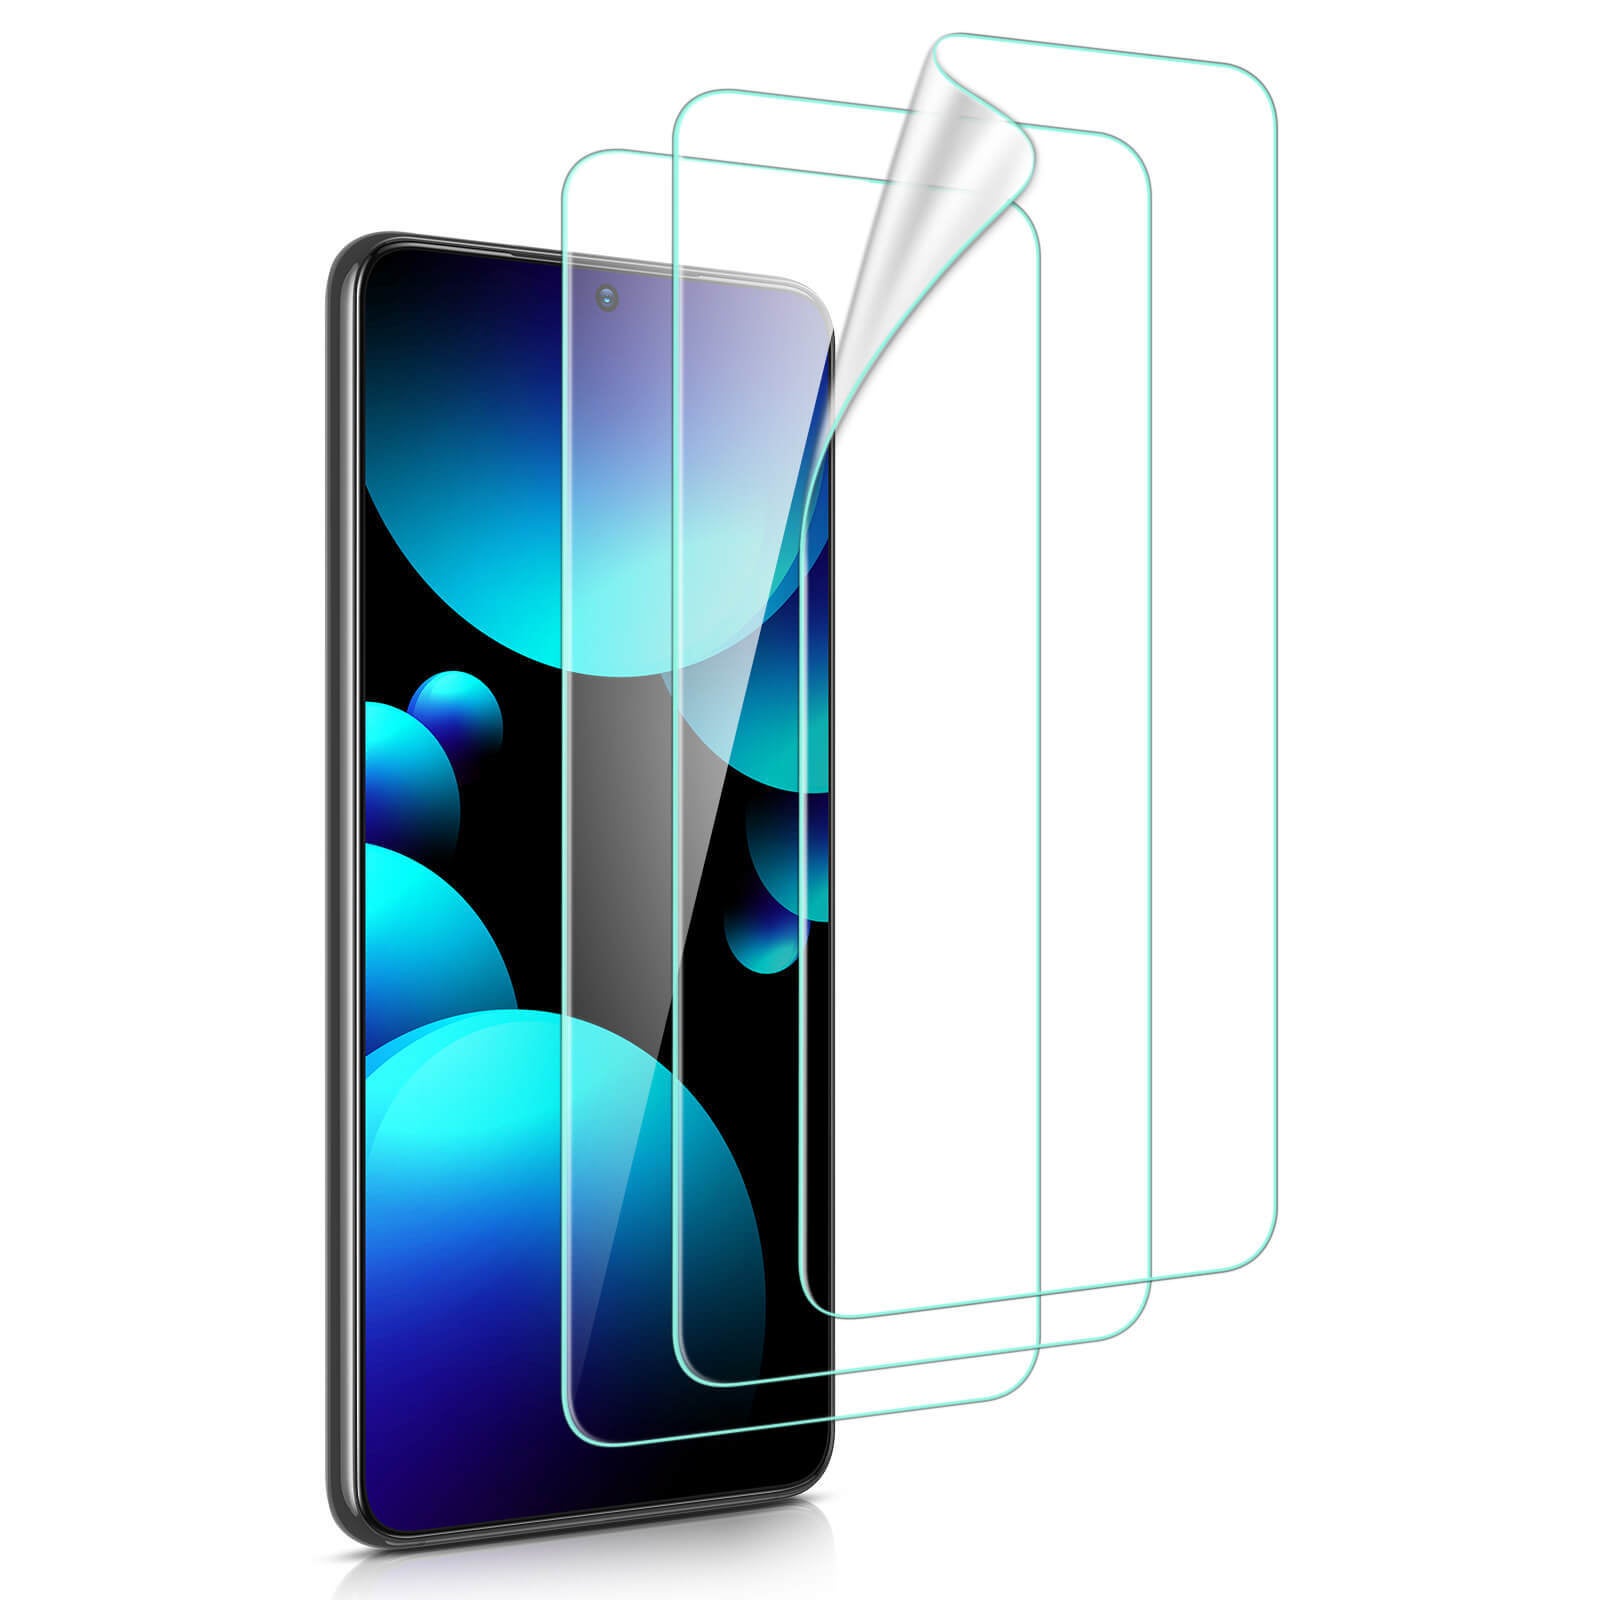 Best Samsung Galaxy S21 Ultra screen protectors